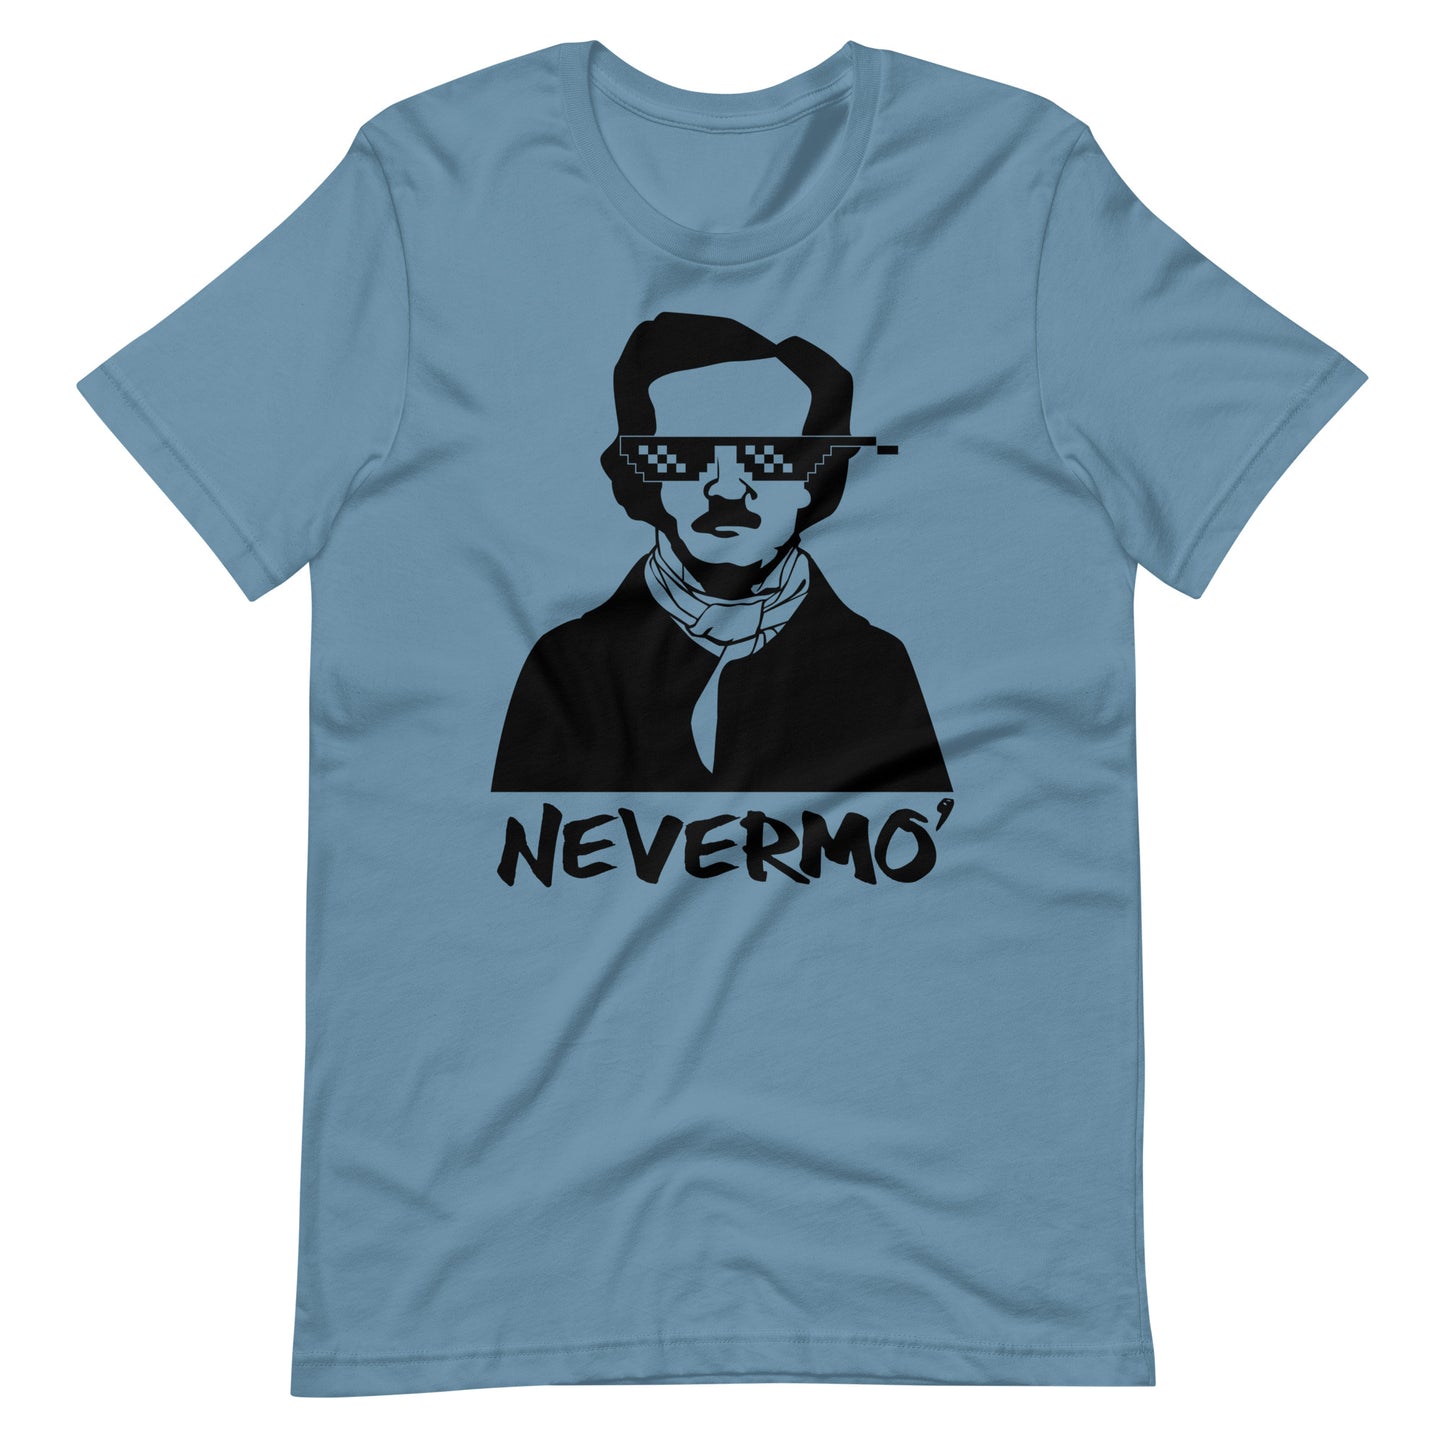 Women's Edgar Allan Poe "Nevermo" t-shirt - Steel Blue Front